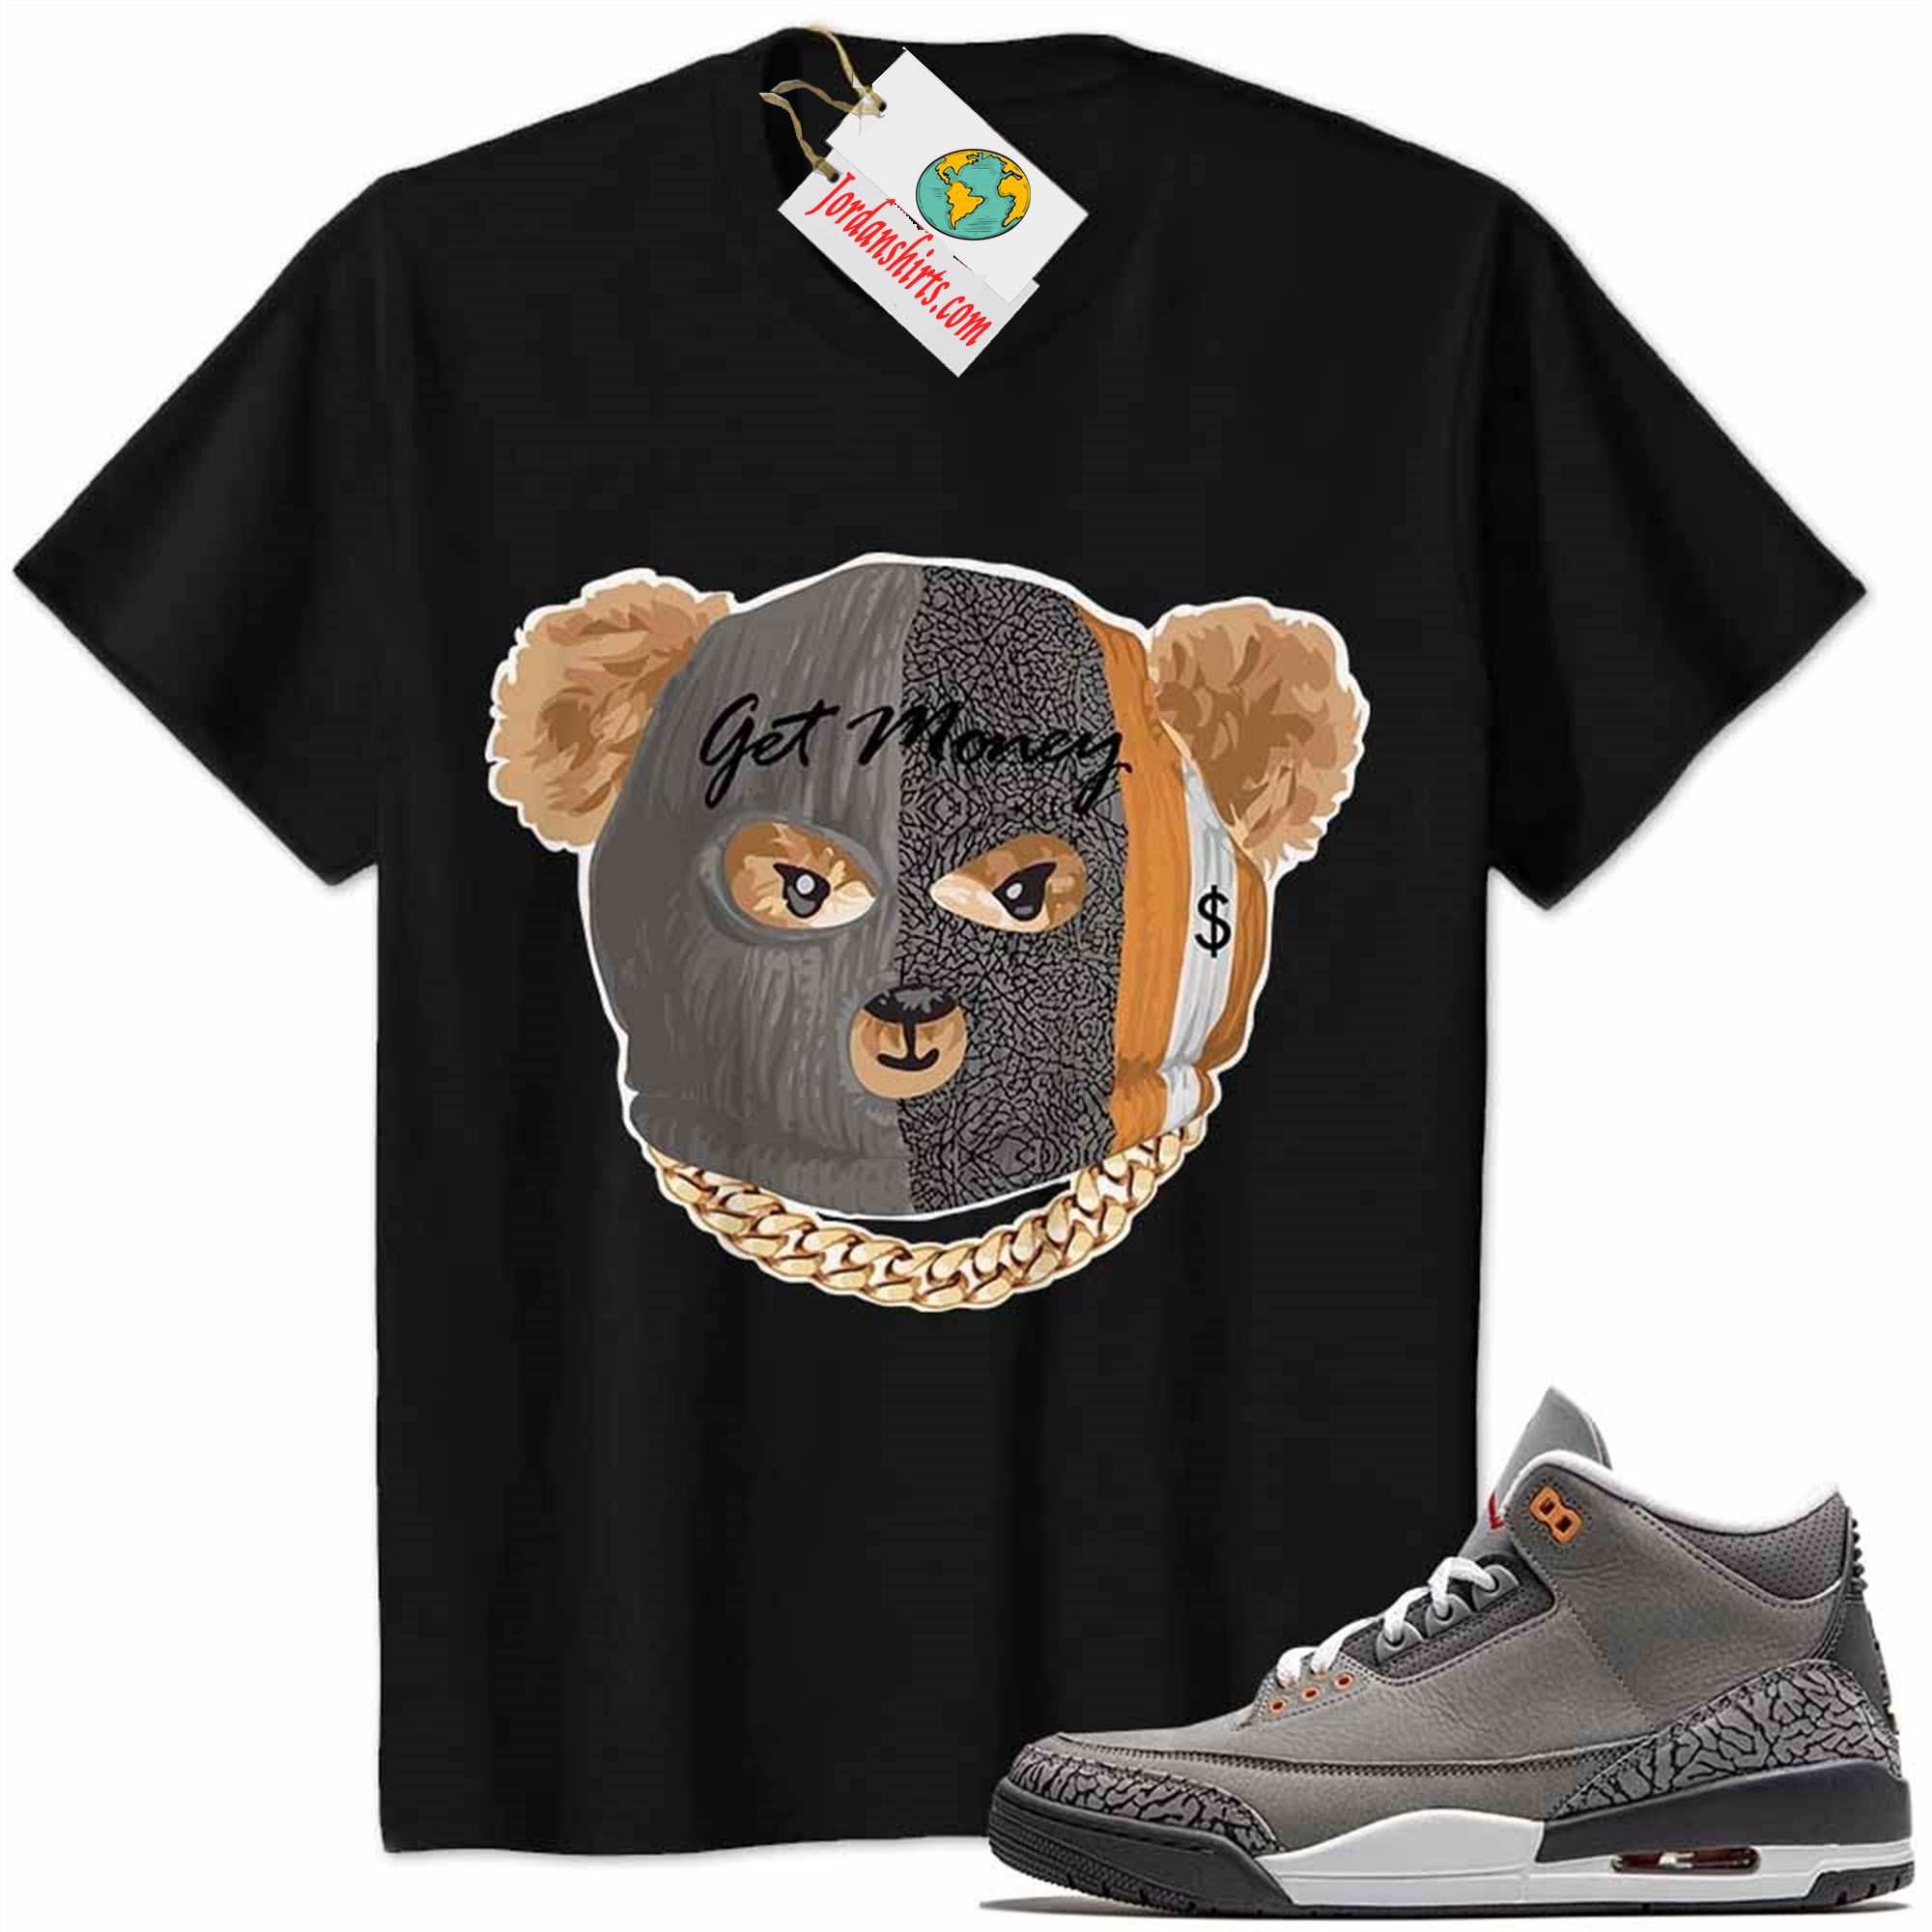 Jordan 3 Shirt, Robber Teddy Get Money Ski Mask Black Air Jordan 3 Cool Grey 3s Size Up To 5xl